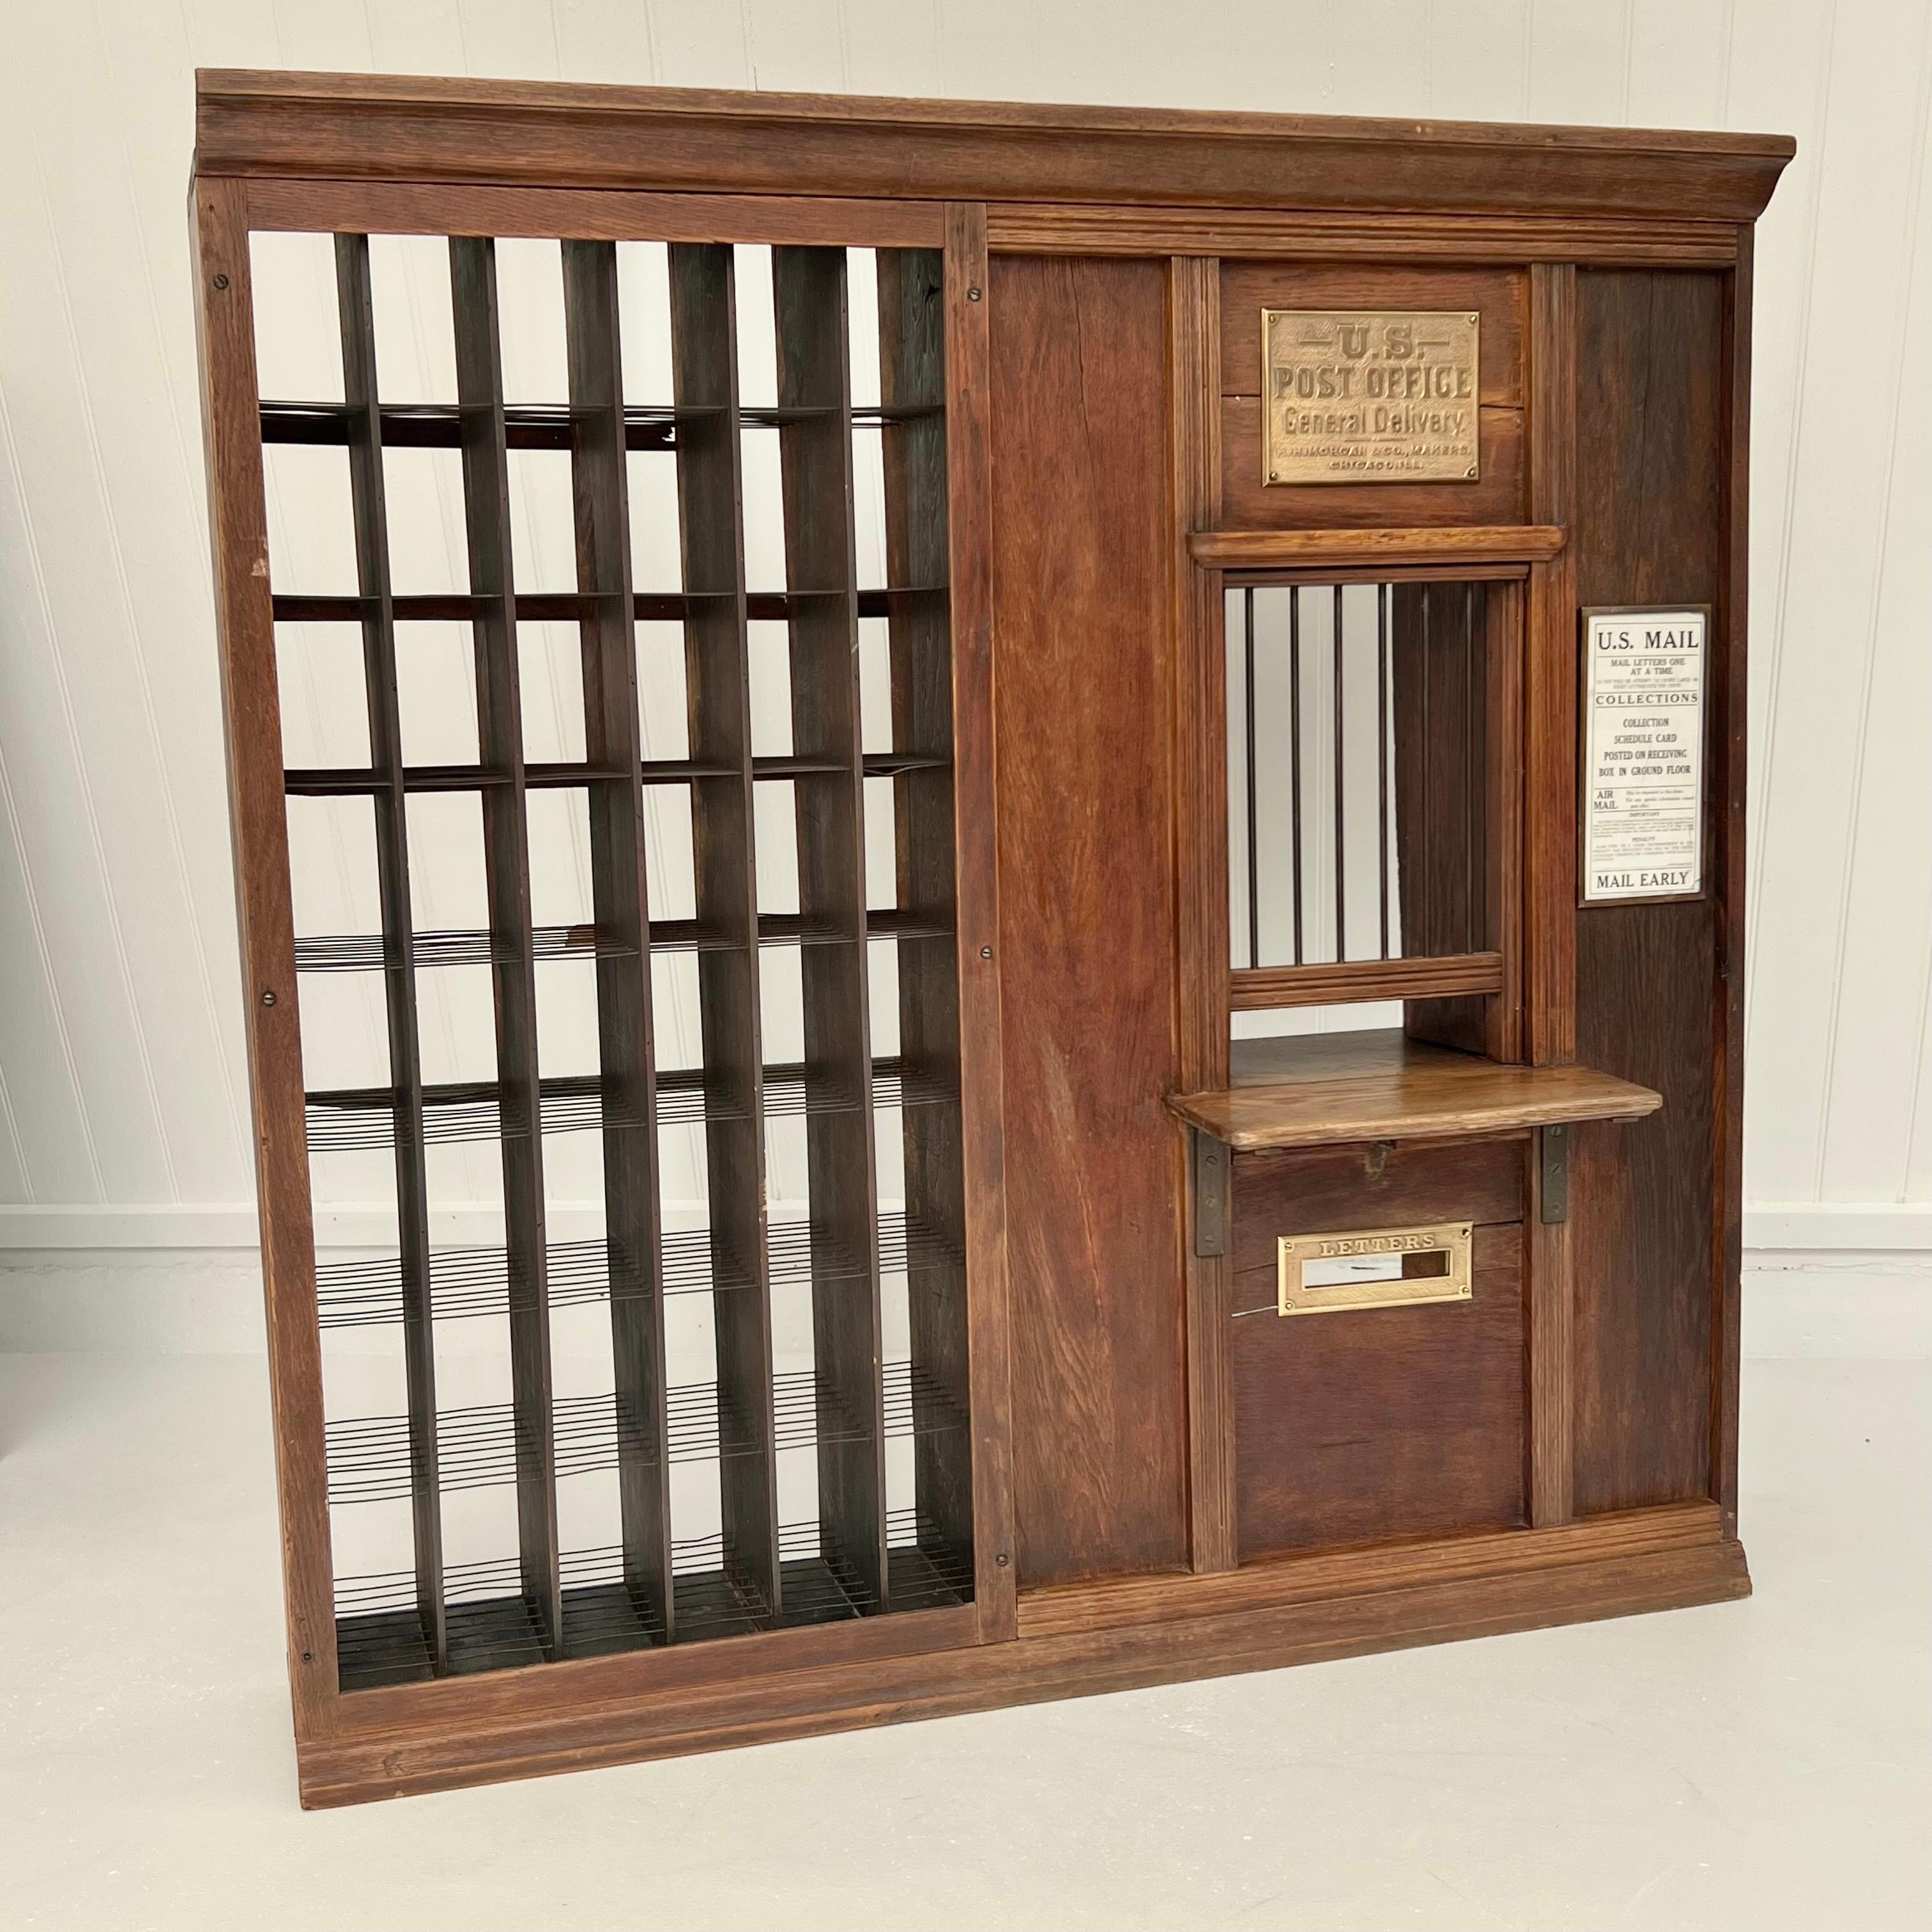 Postamtes Postamt-Postfenster mit Teller's Cage, Ende 1800, USA (Metall) im Angebot